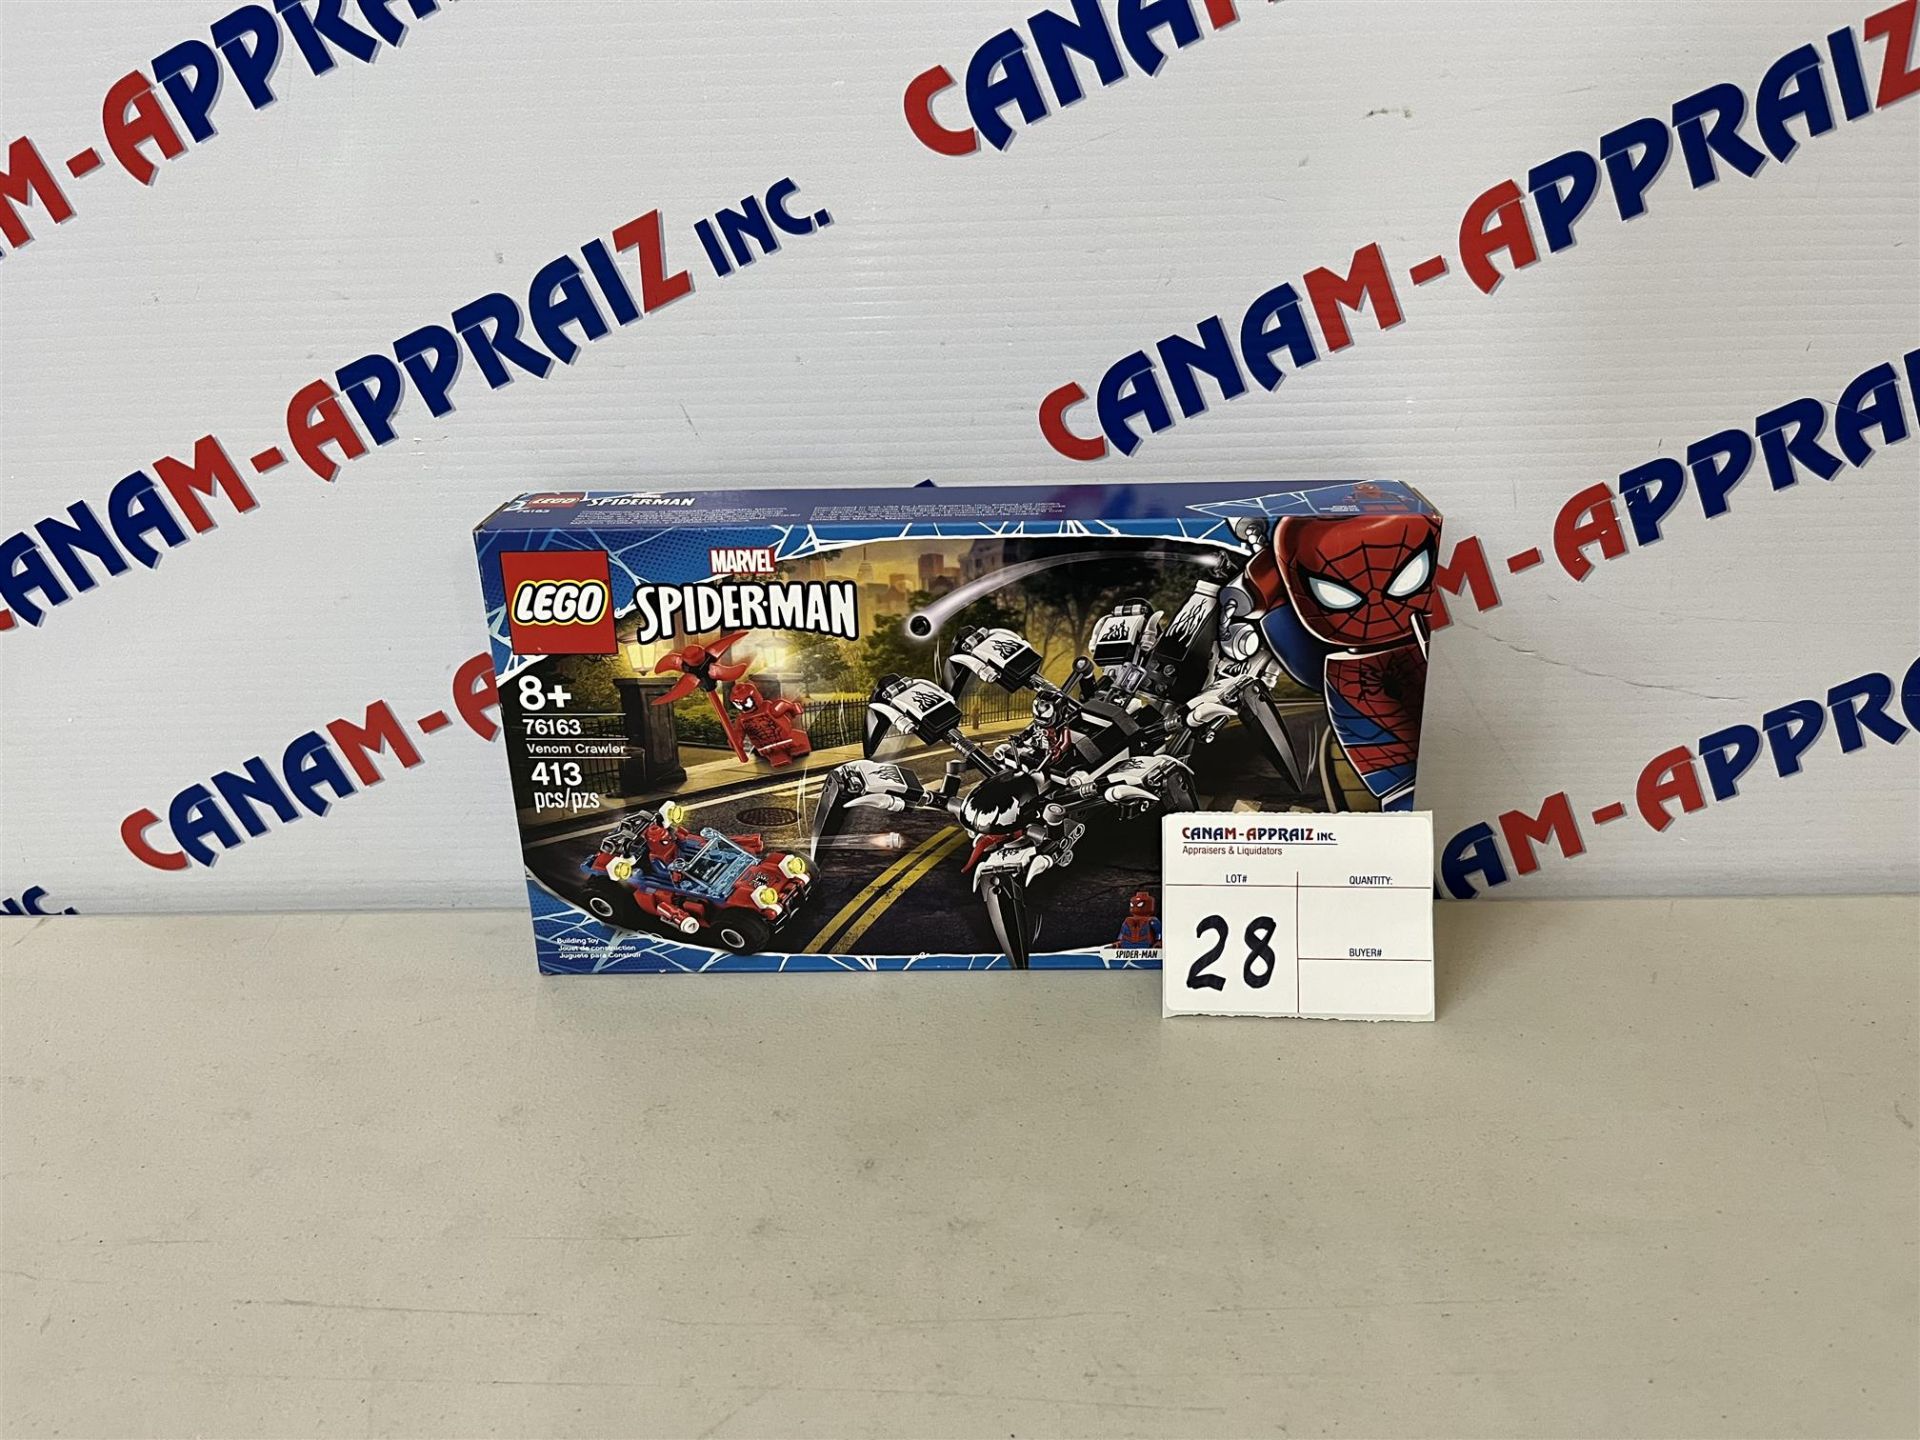 LEGO - 76163, 413 pcs - Spiderman, Venom Crawler